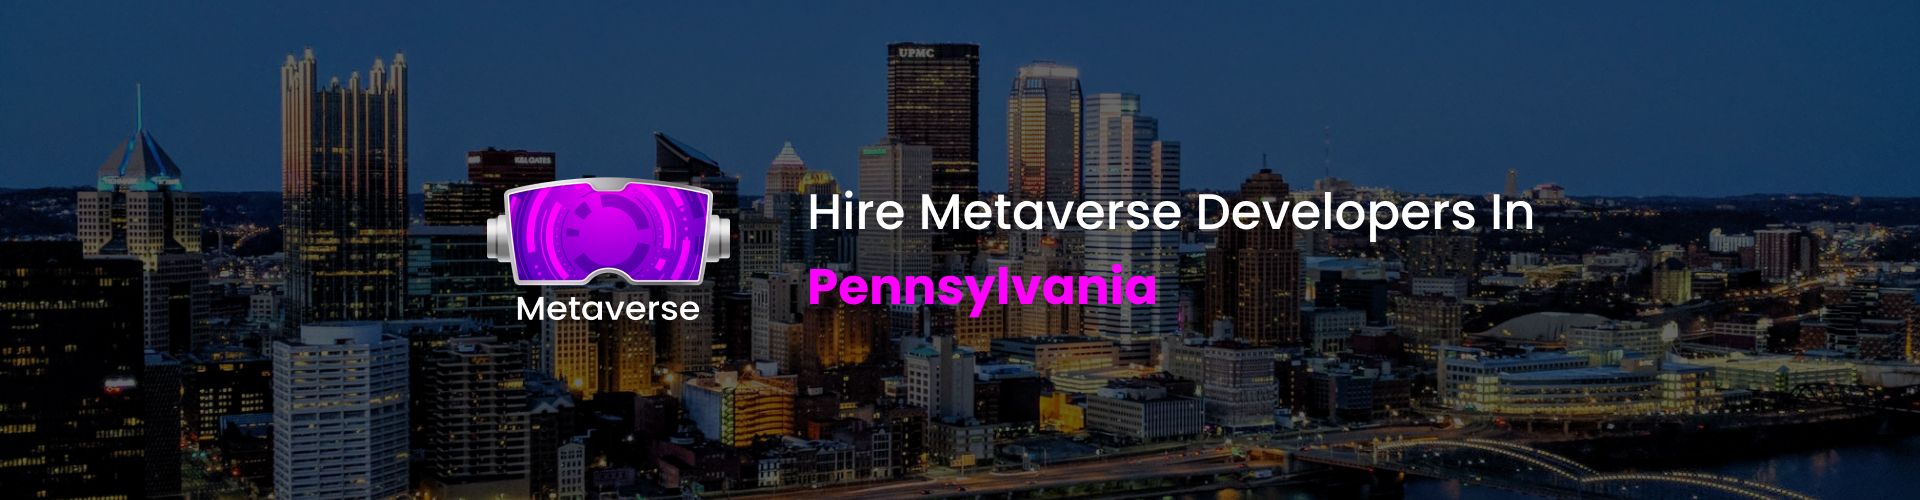 hire metaverse developers in pennsylvania